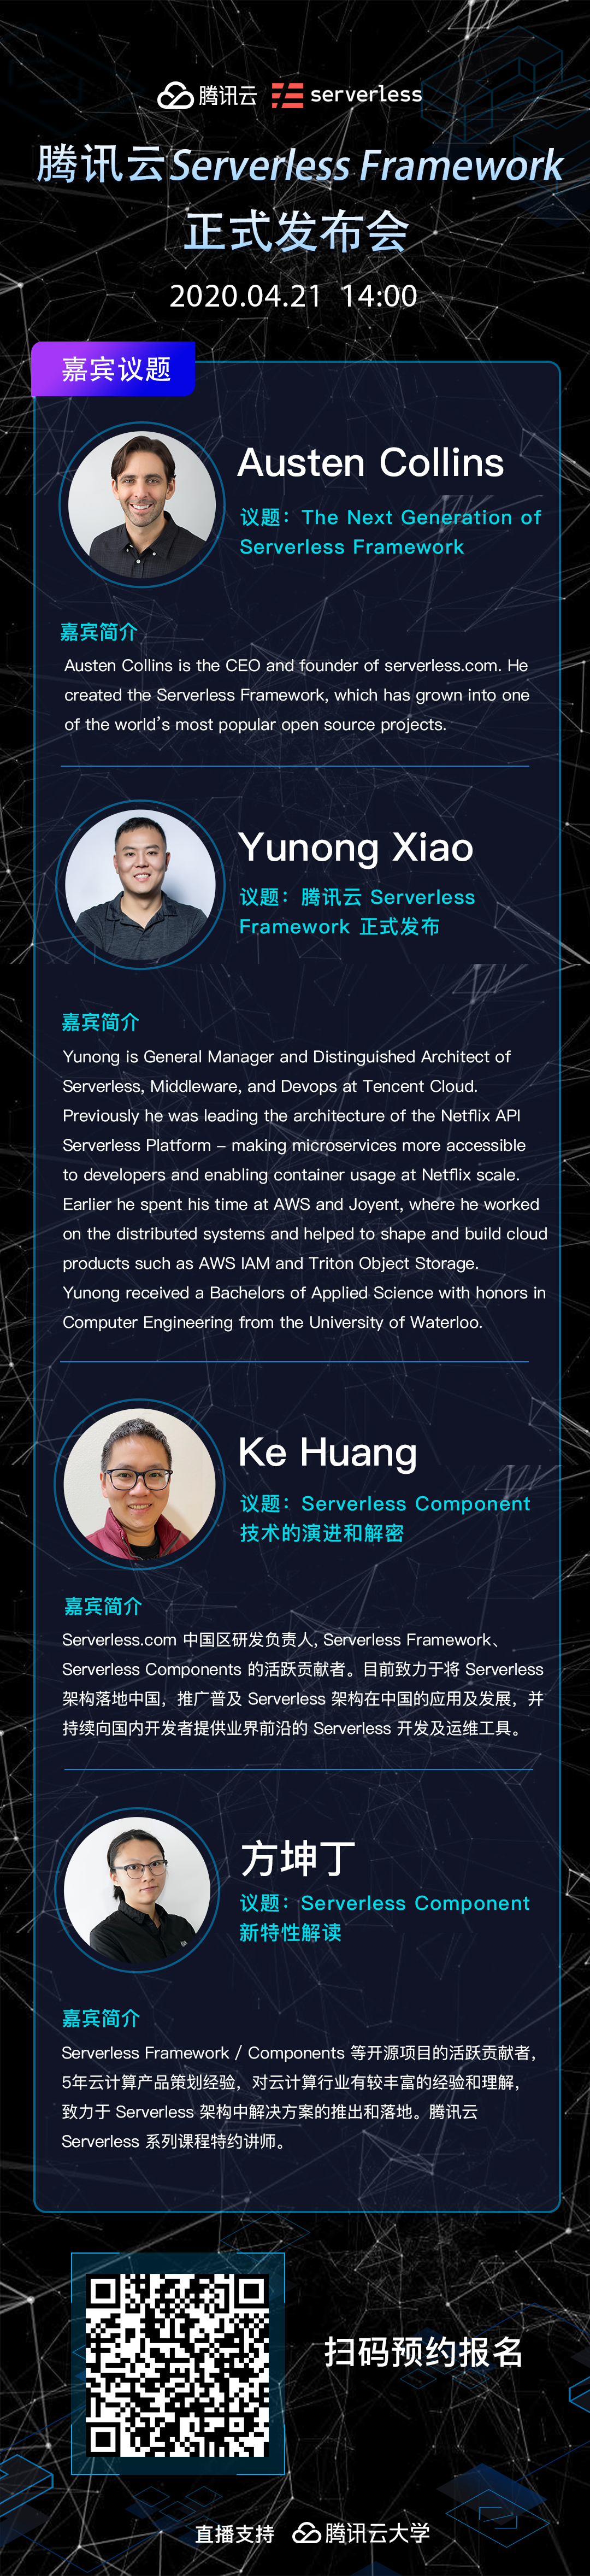 Conferencia oficial de Tencent Cloud Serverless Framework